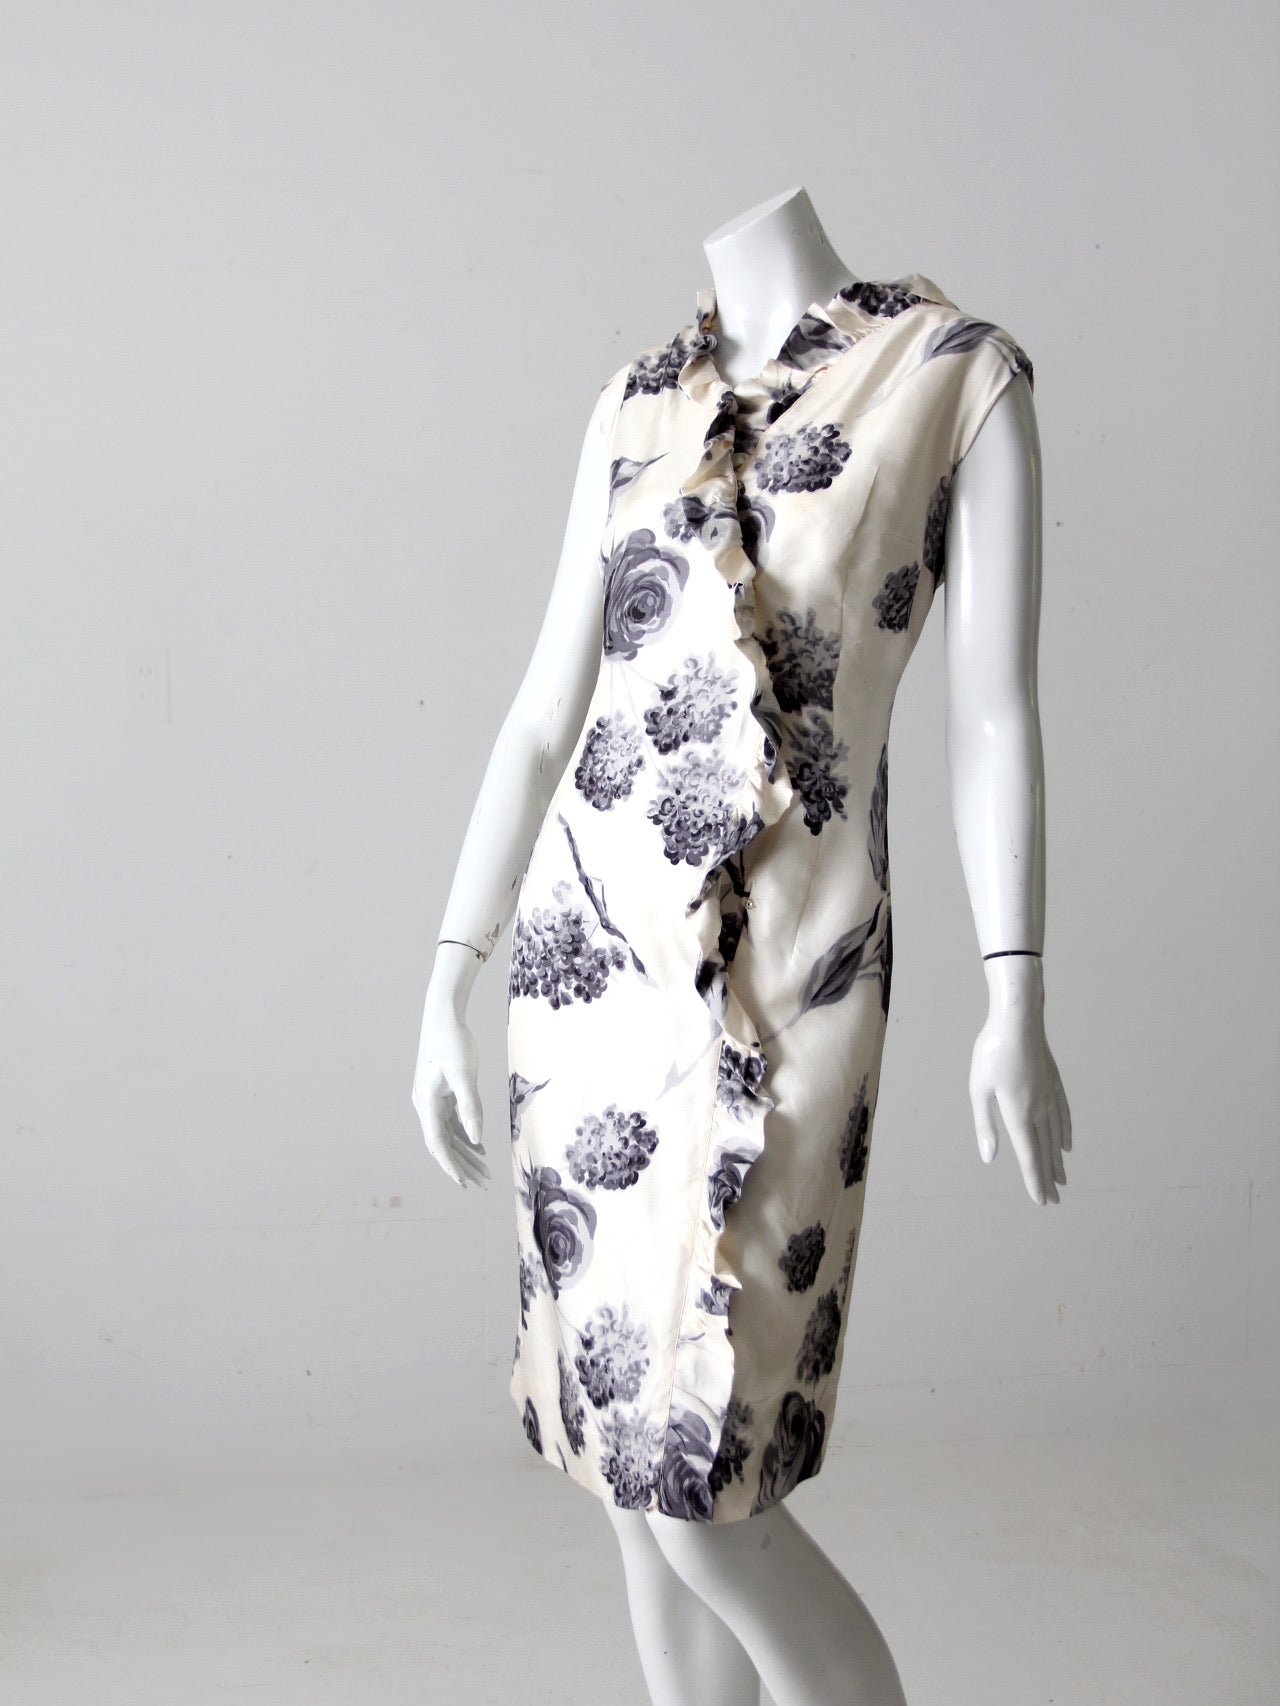 vintage Italian silk floral dress